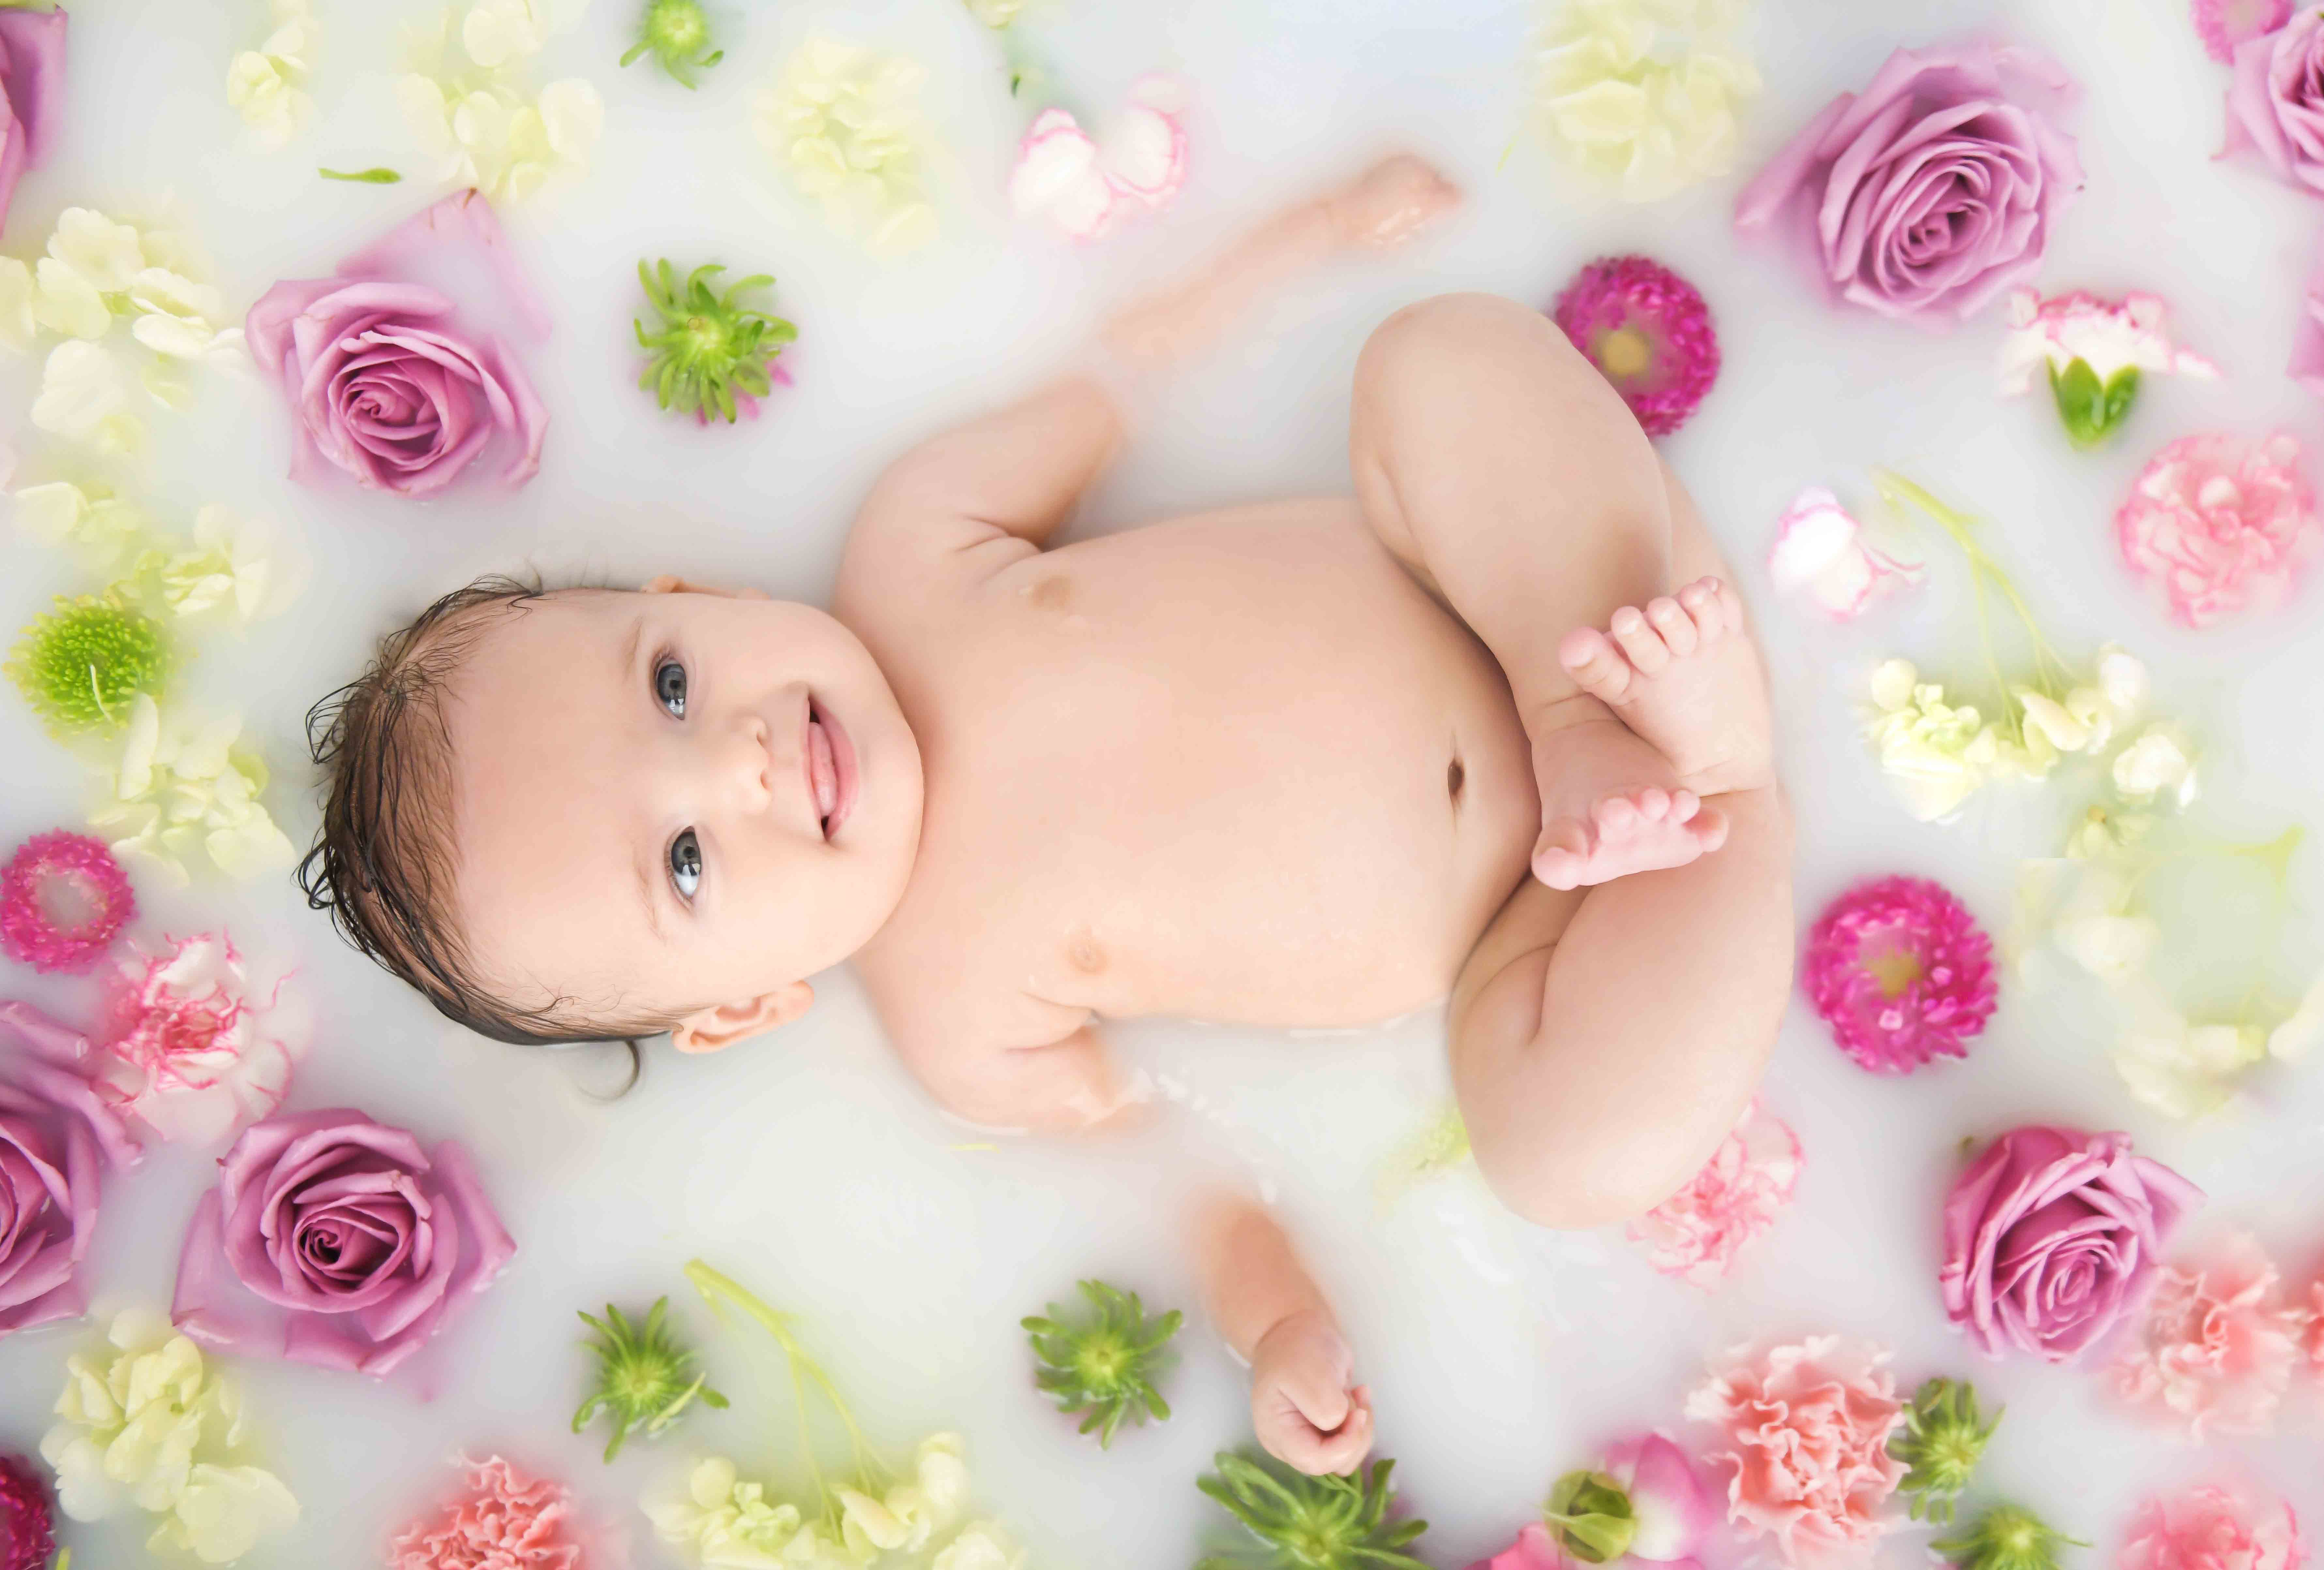 Baby Milk Bath Photo Session - Los Angeles based photo ...